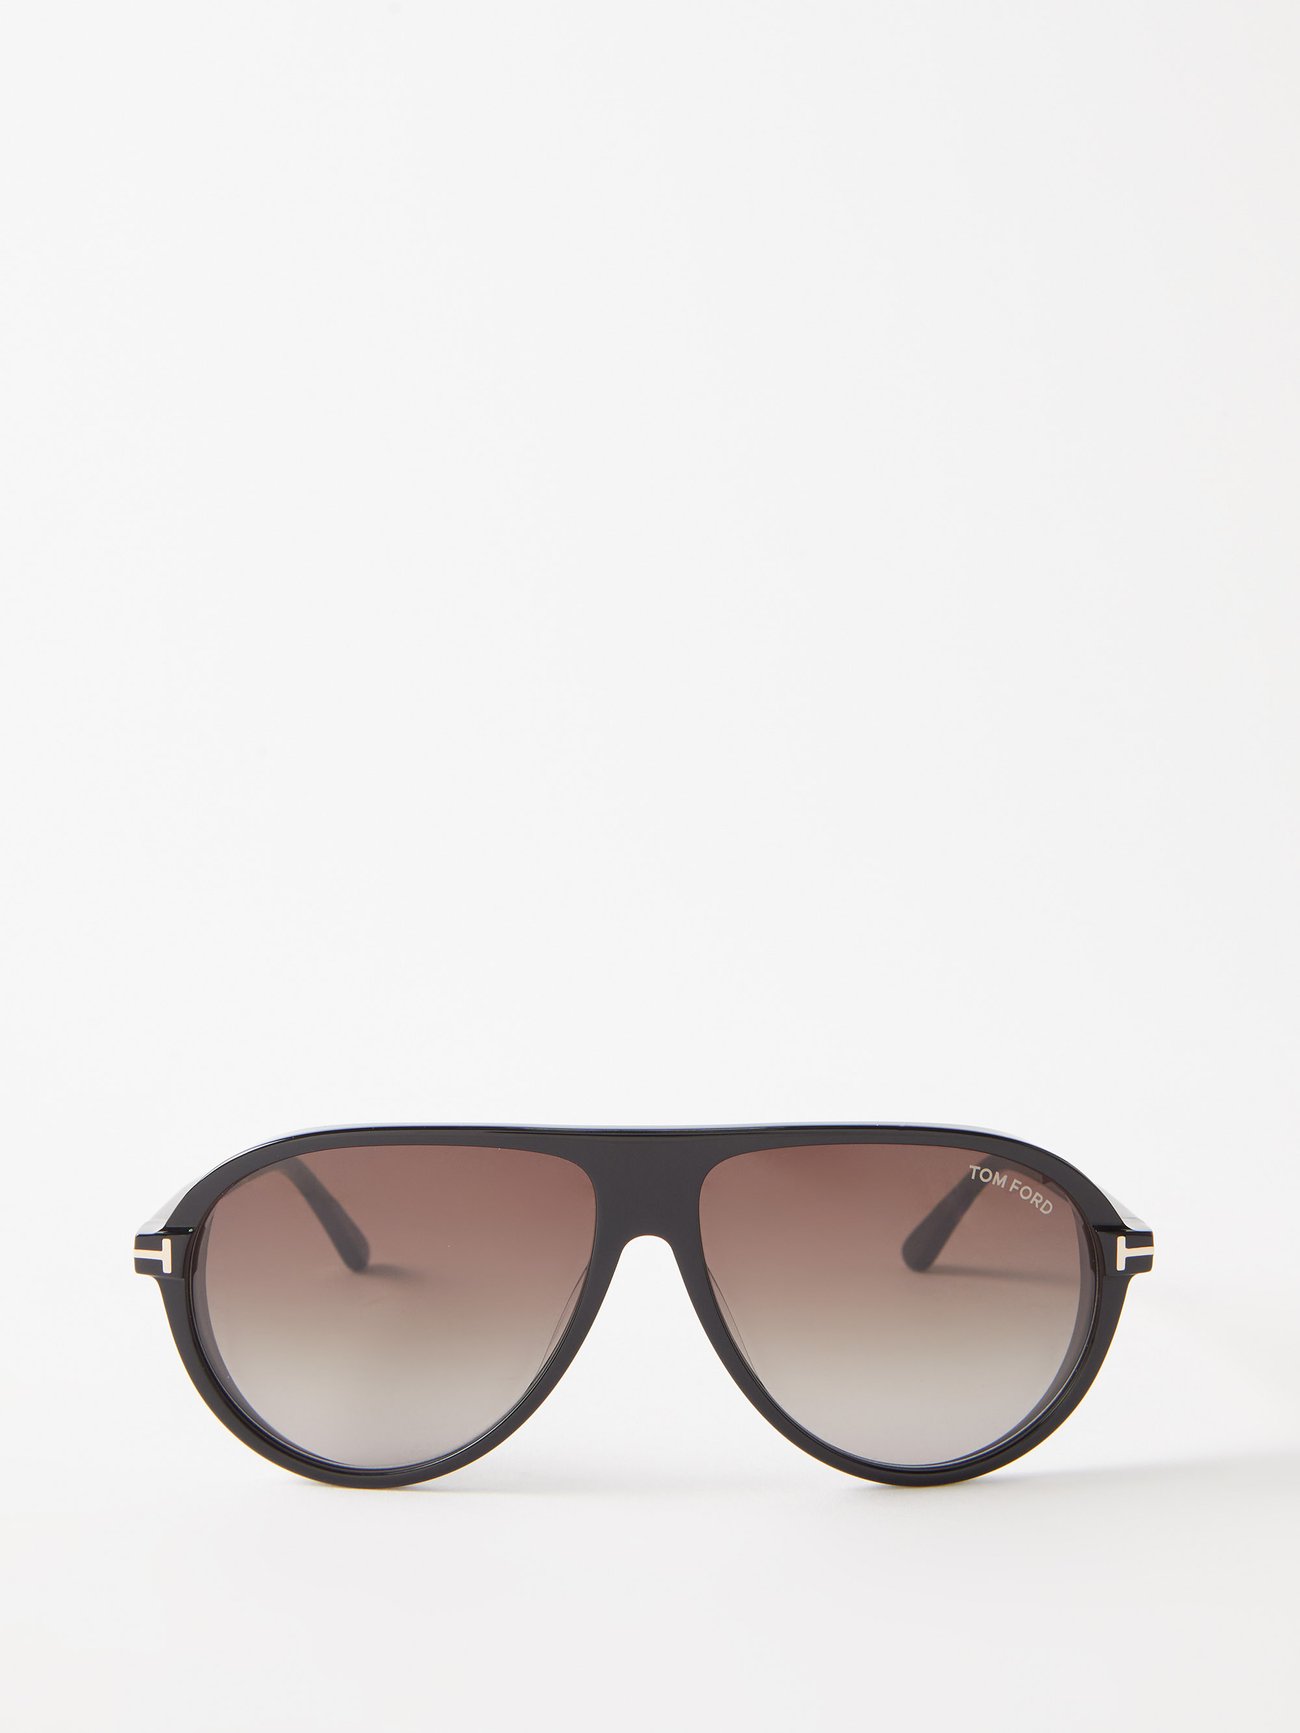 Fake Tom Ford Fashion Sunglasses cheap for you